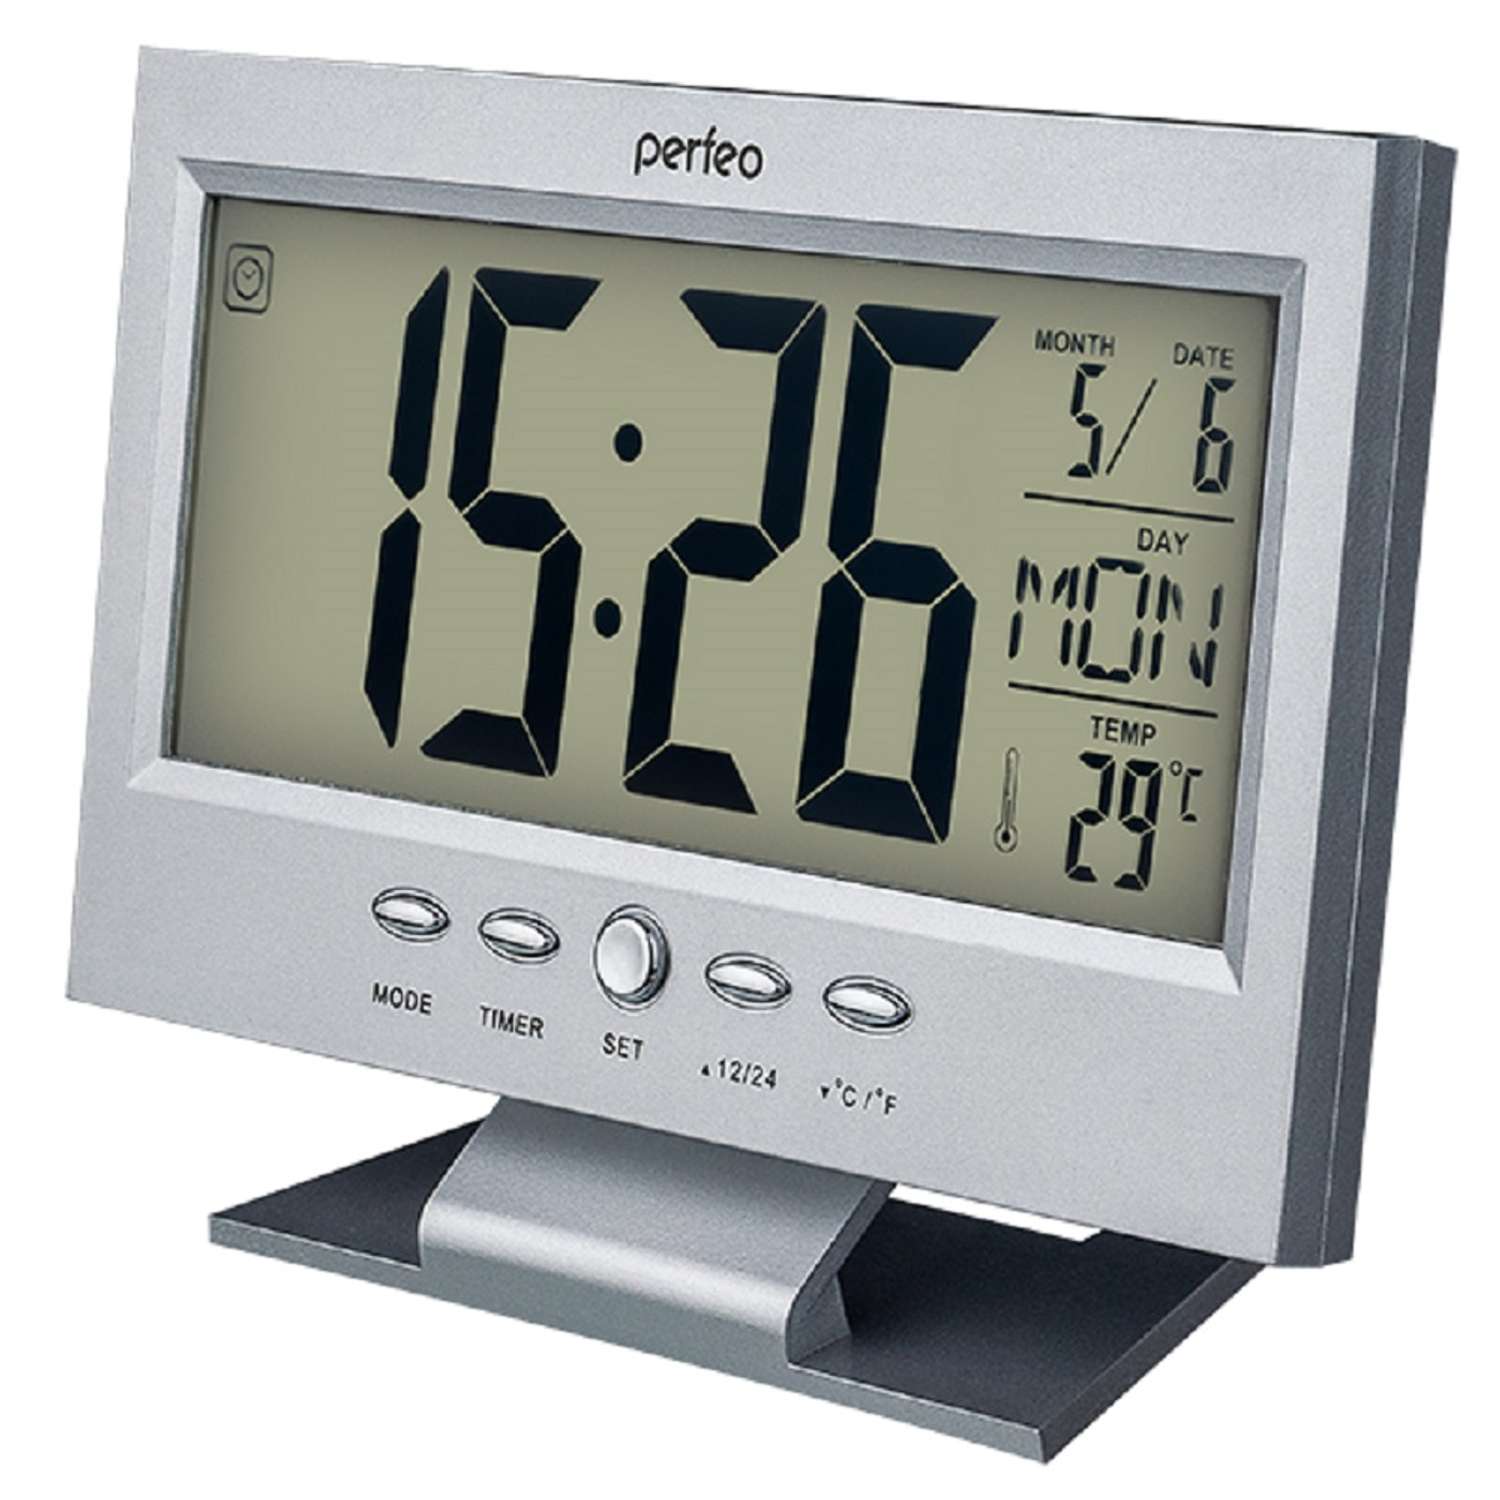 Часы-будильник Perfeo Set серебряный PF-S2618 время температура дата - фото 1